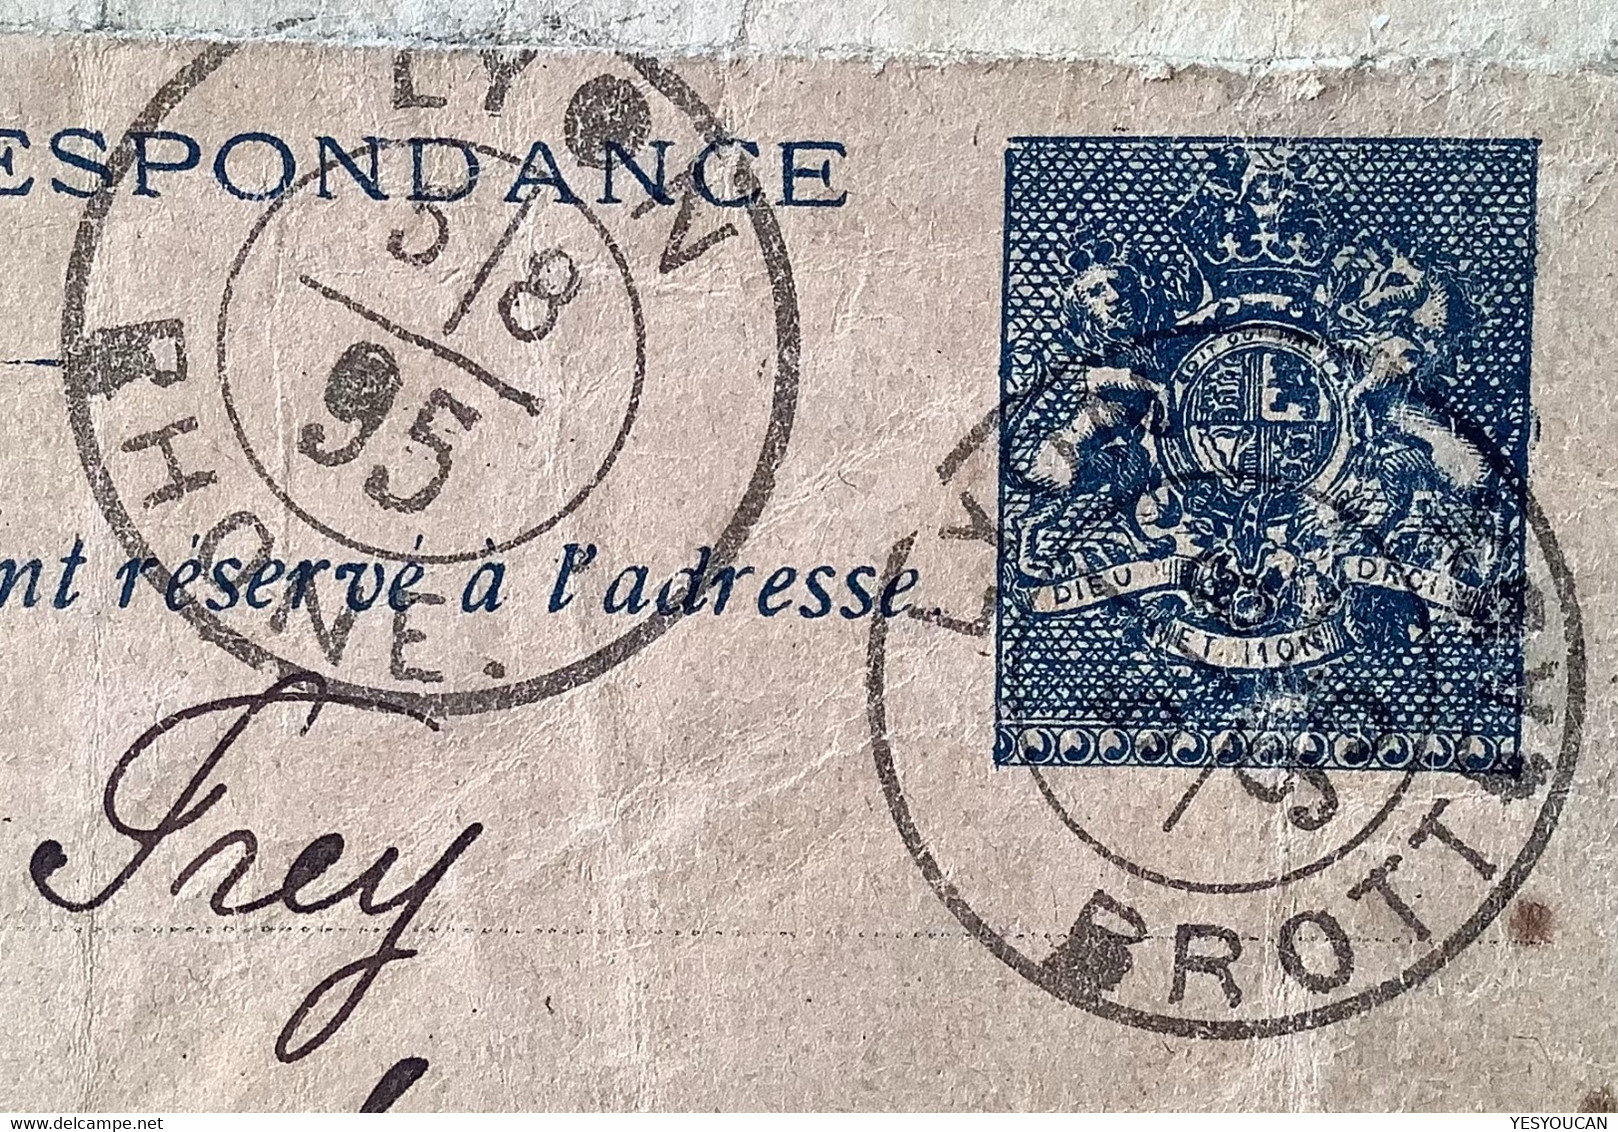 RR ! SPEUDO ENTIER POSTAL POSTE LOCALE PUB. 1895 LYON" London House Cours Morand" (France Cinderella Local Post Tailor - Cartes-lettres